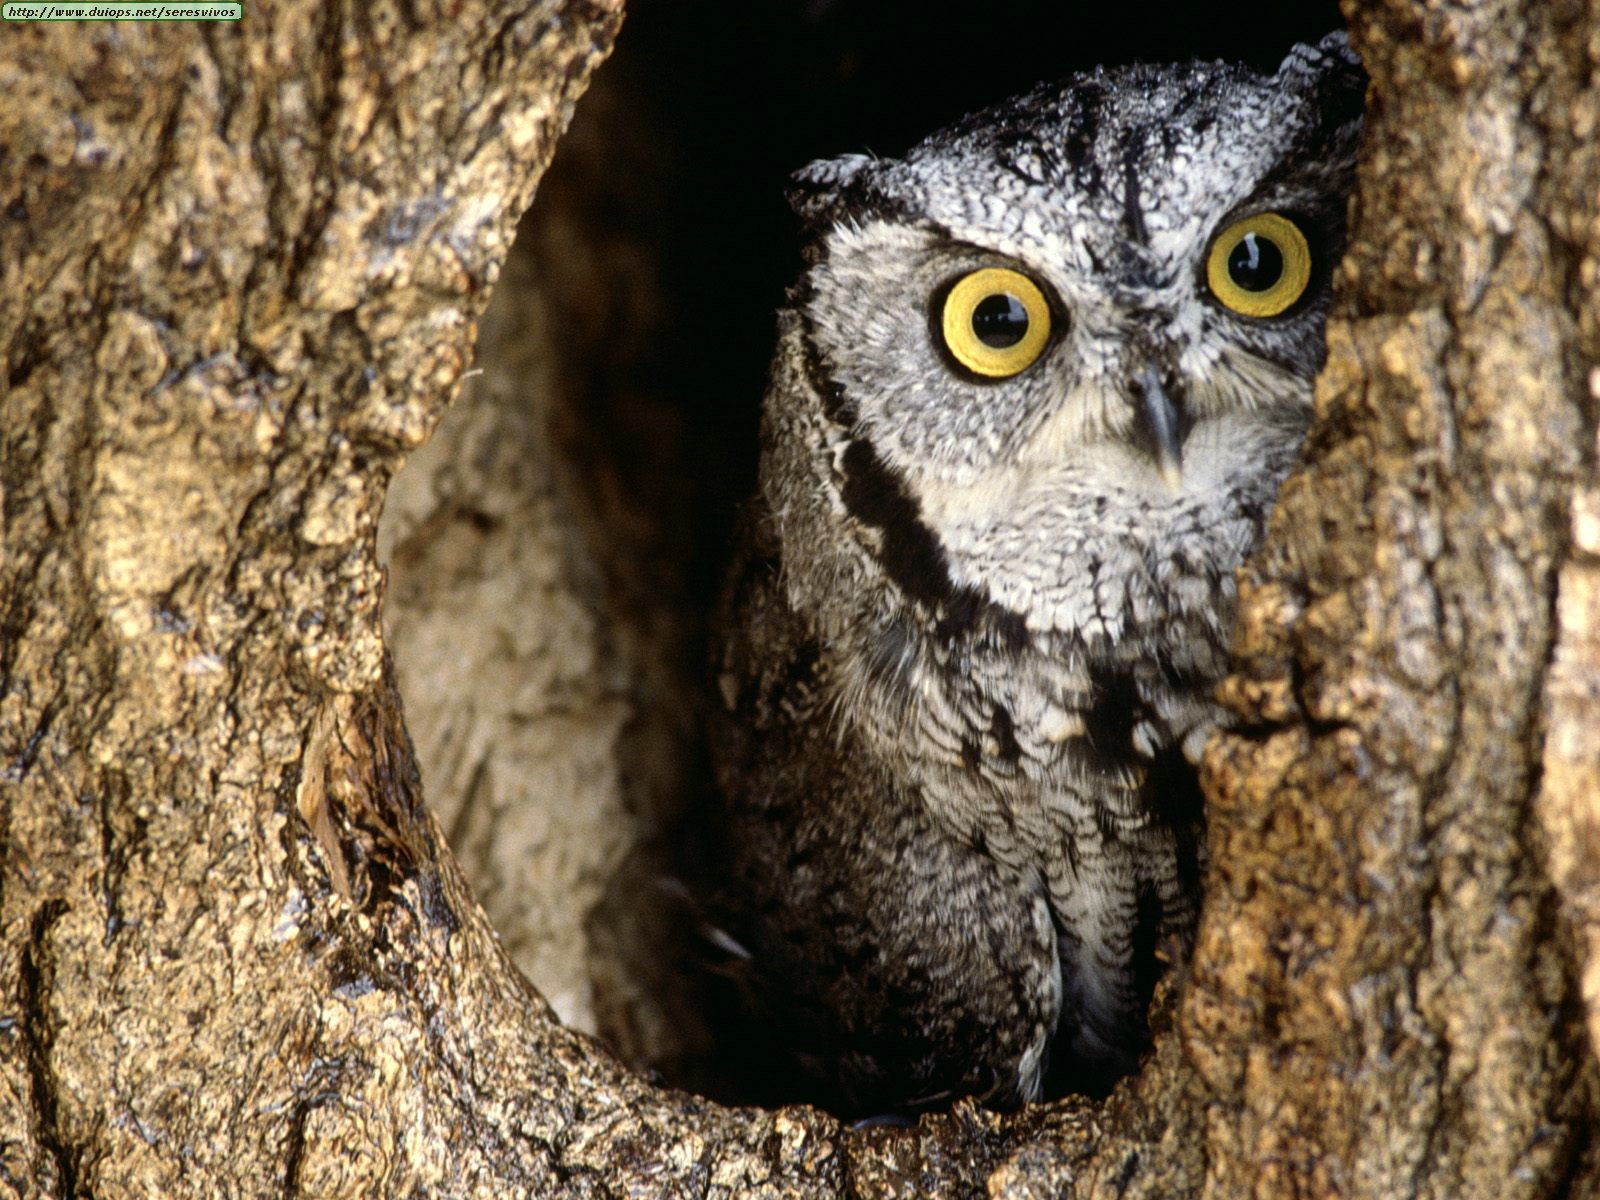 Believe it or not, owls are dangerous